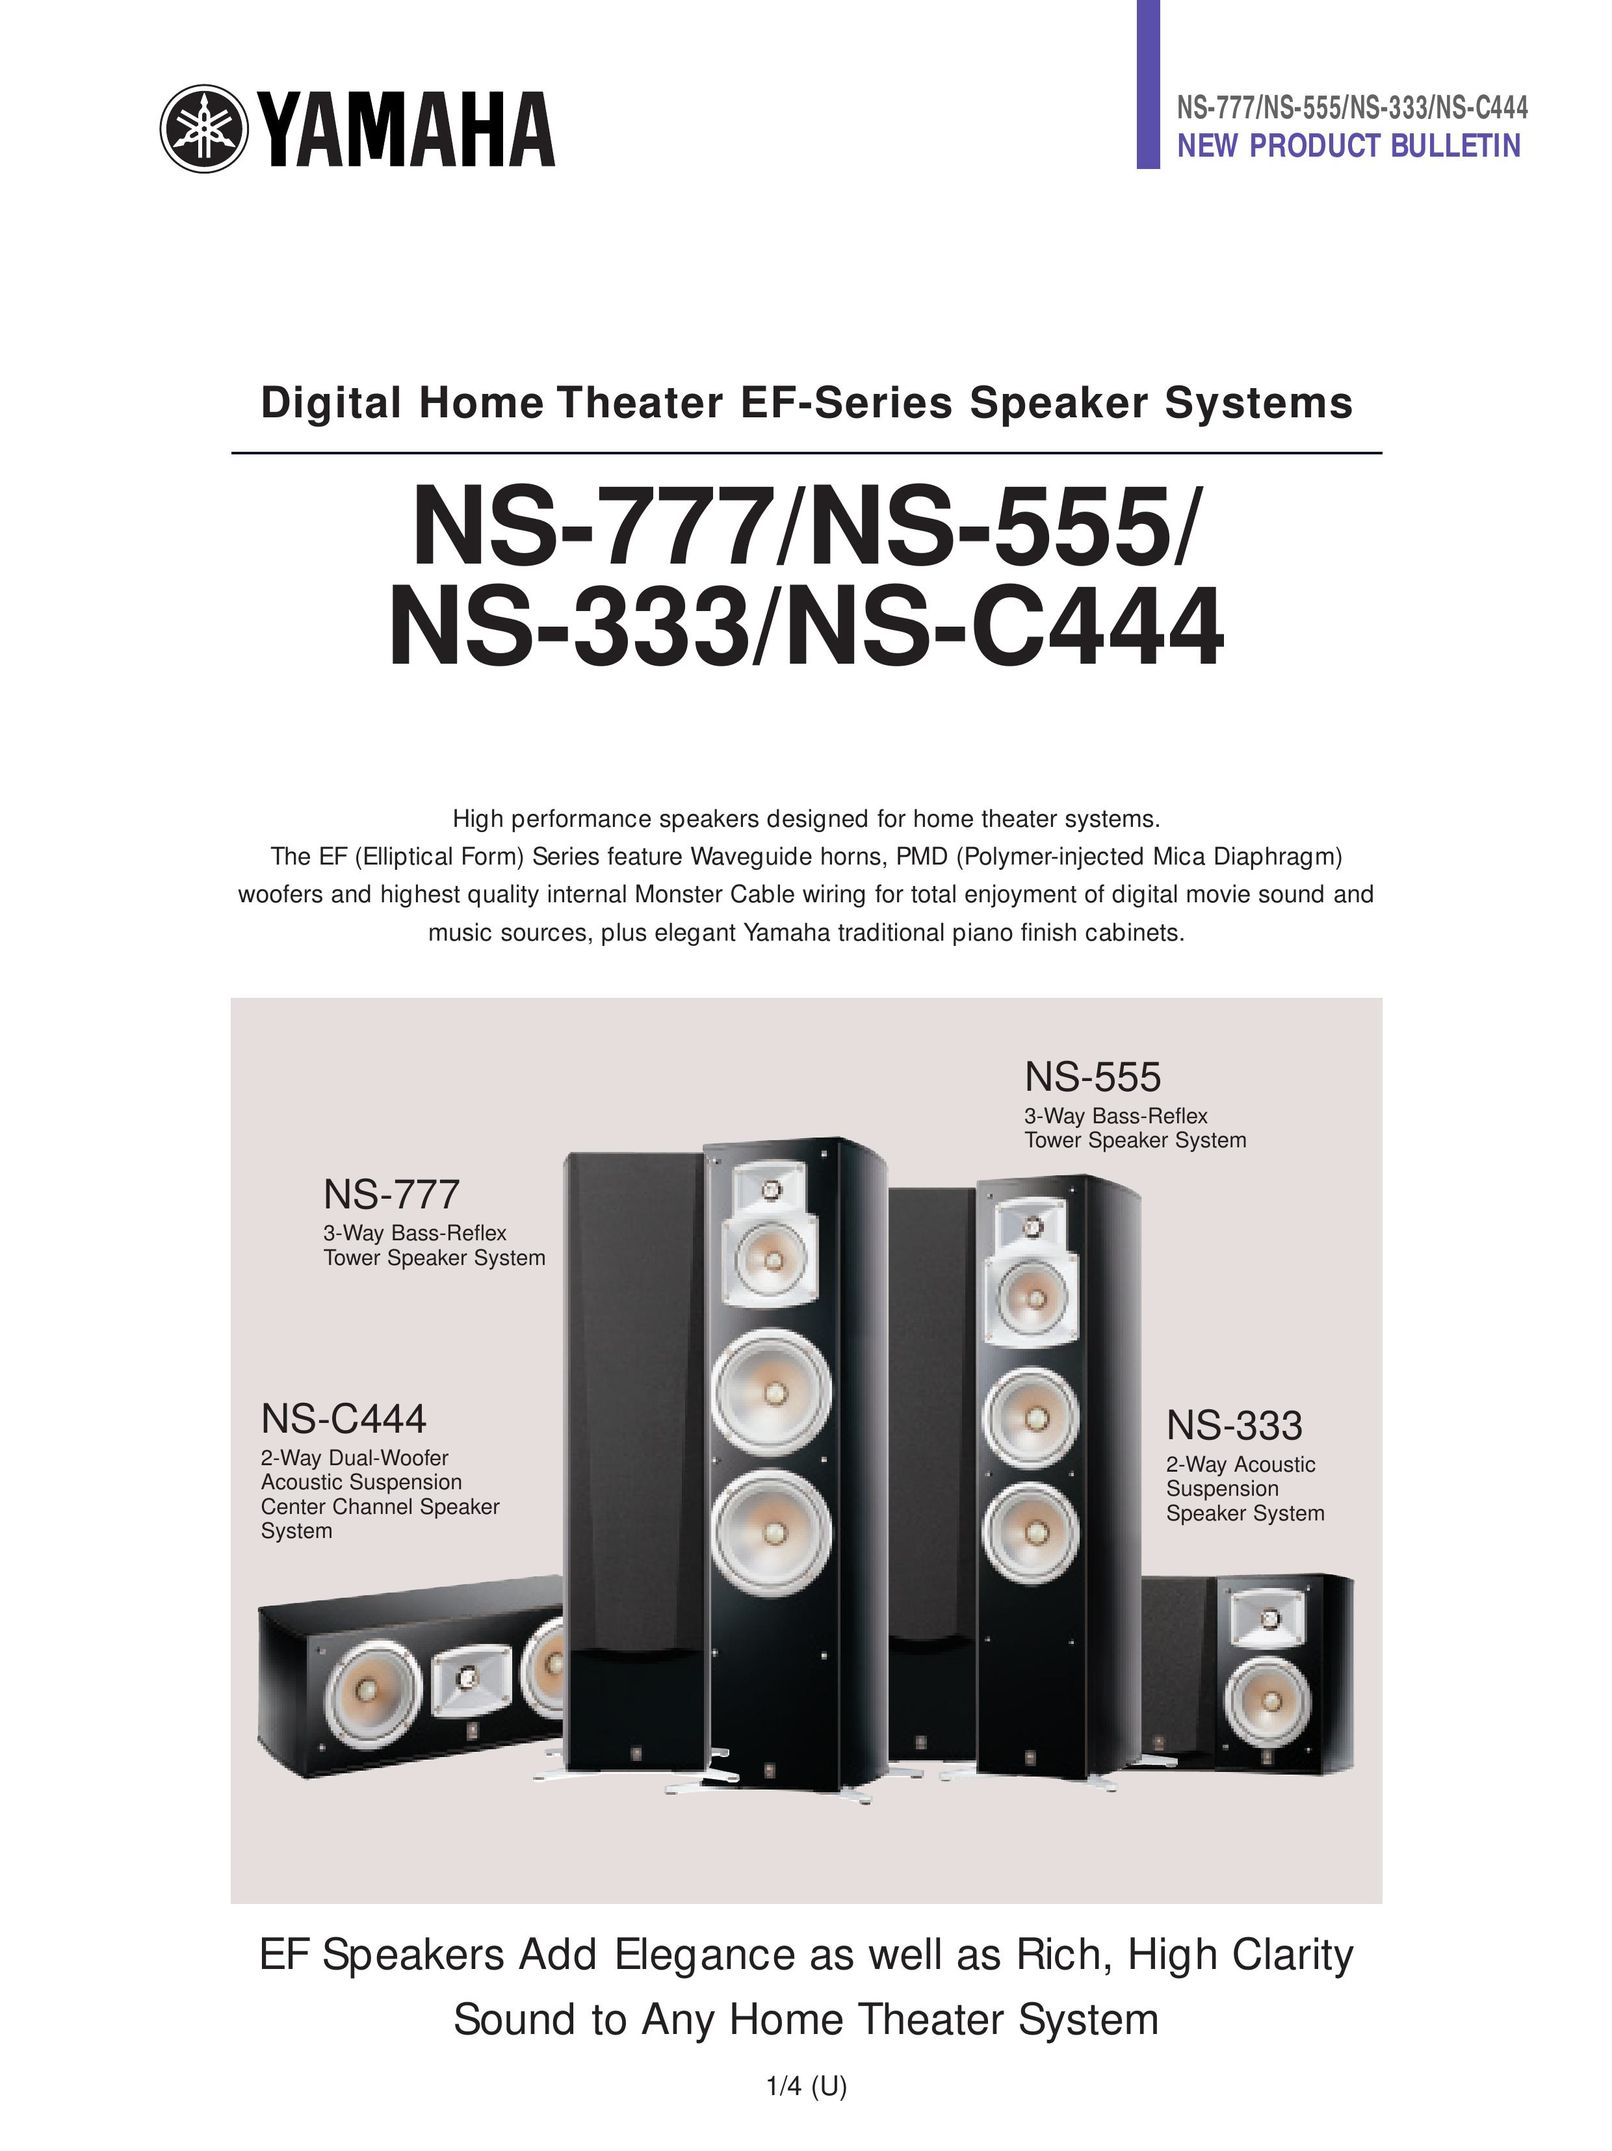 Yamaha NS-333/NS-C444 Speaker System User Manual